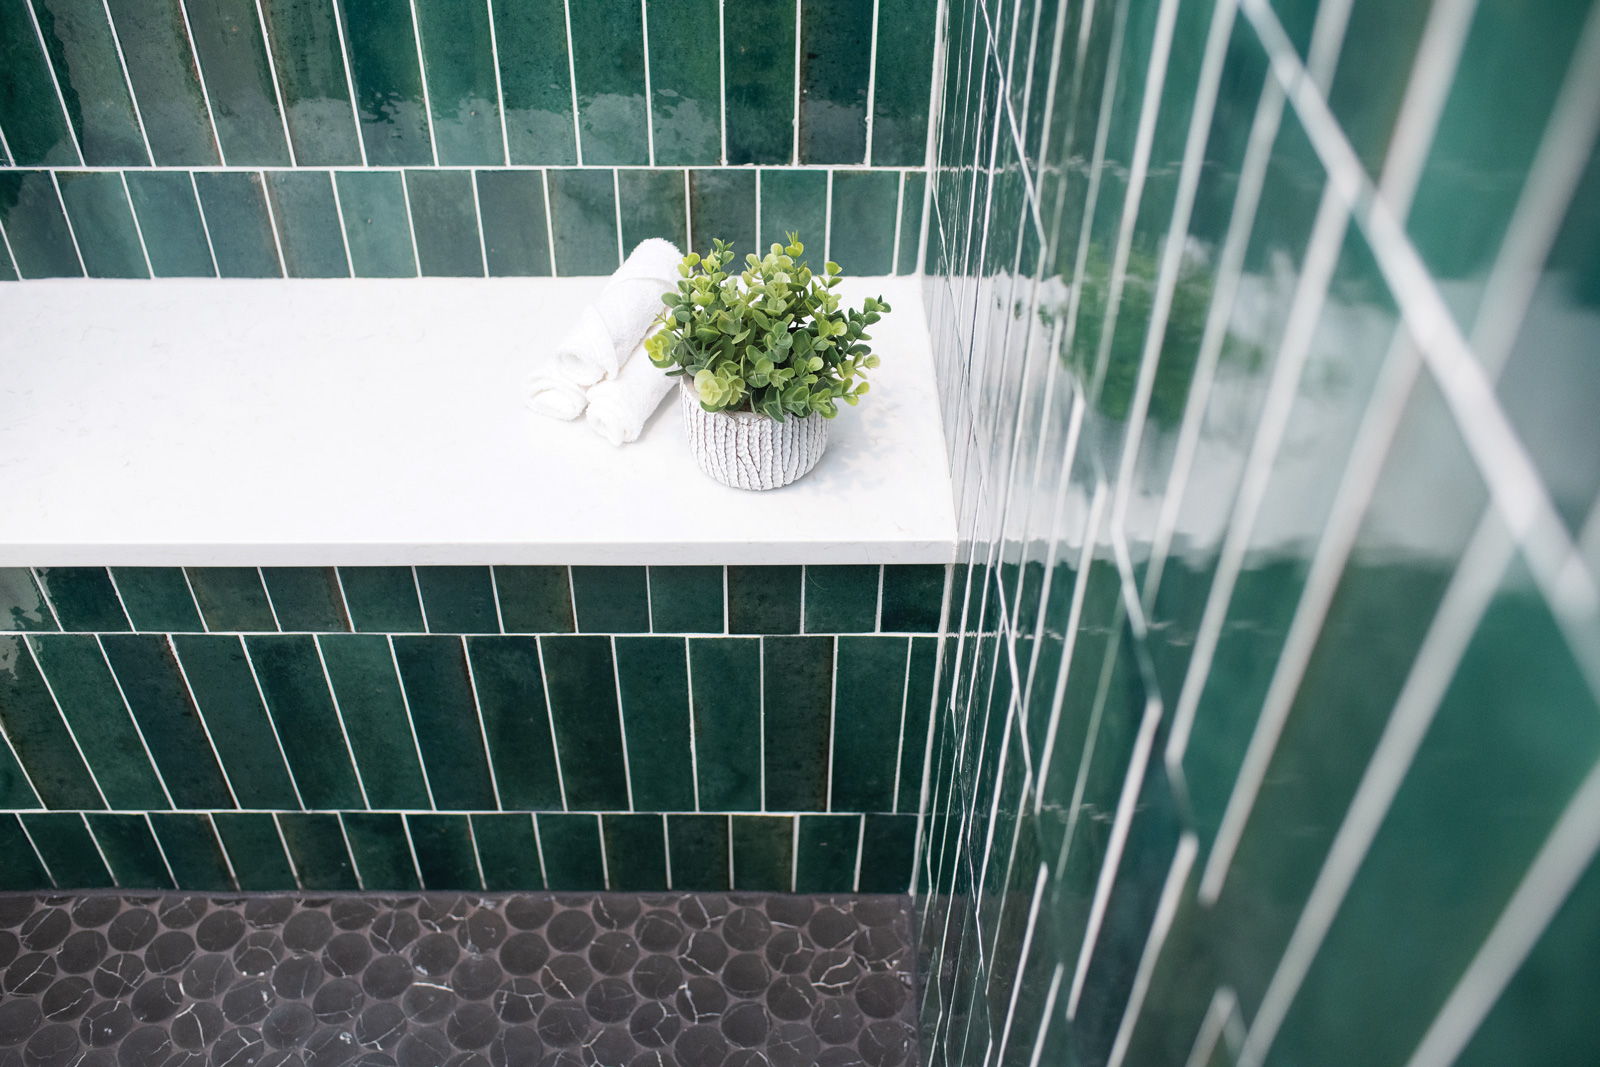 Decor details in green tiled shower